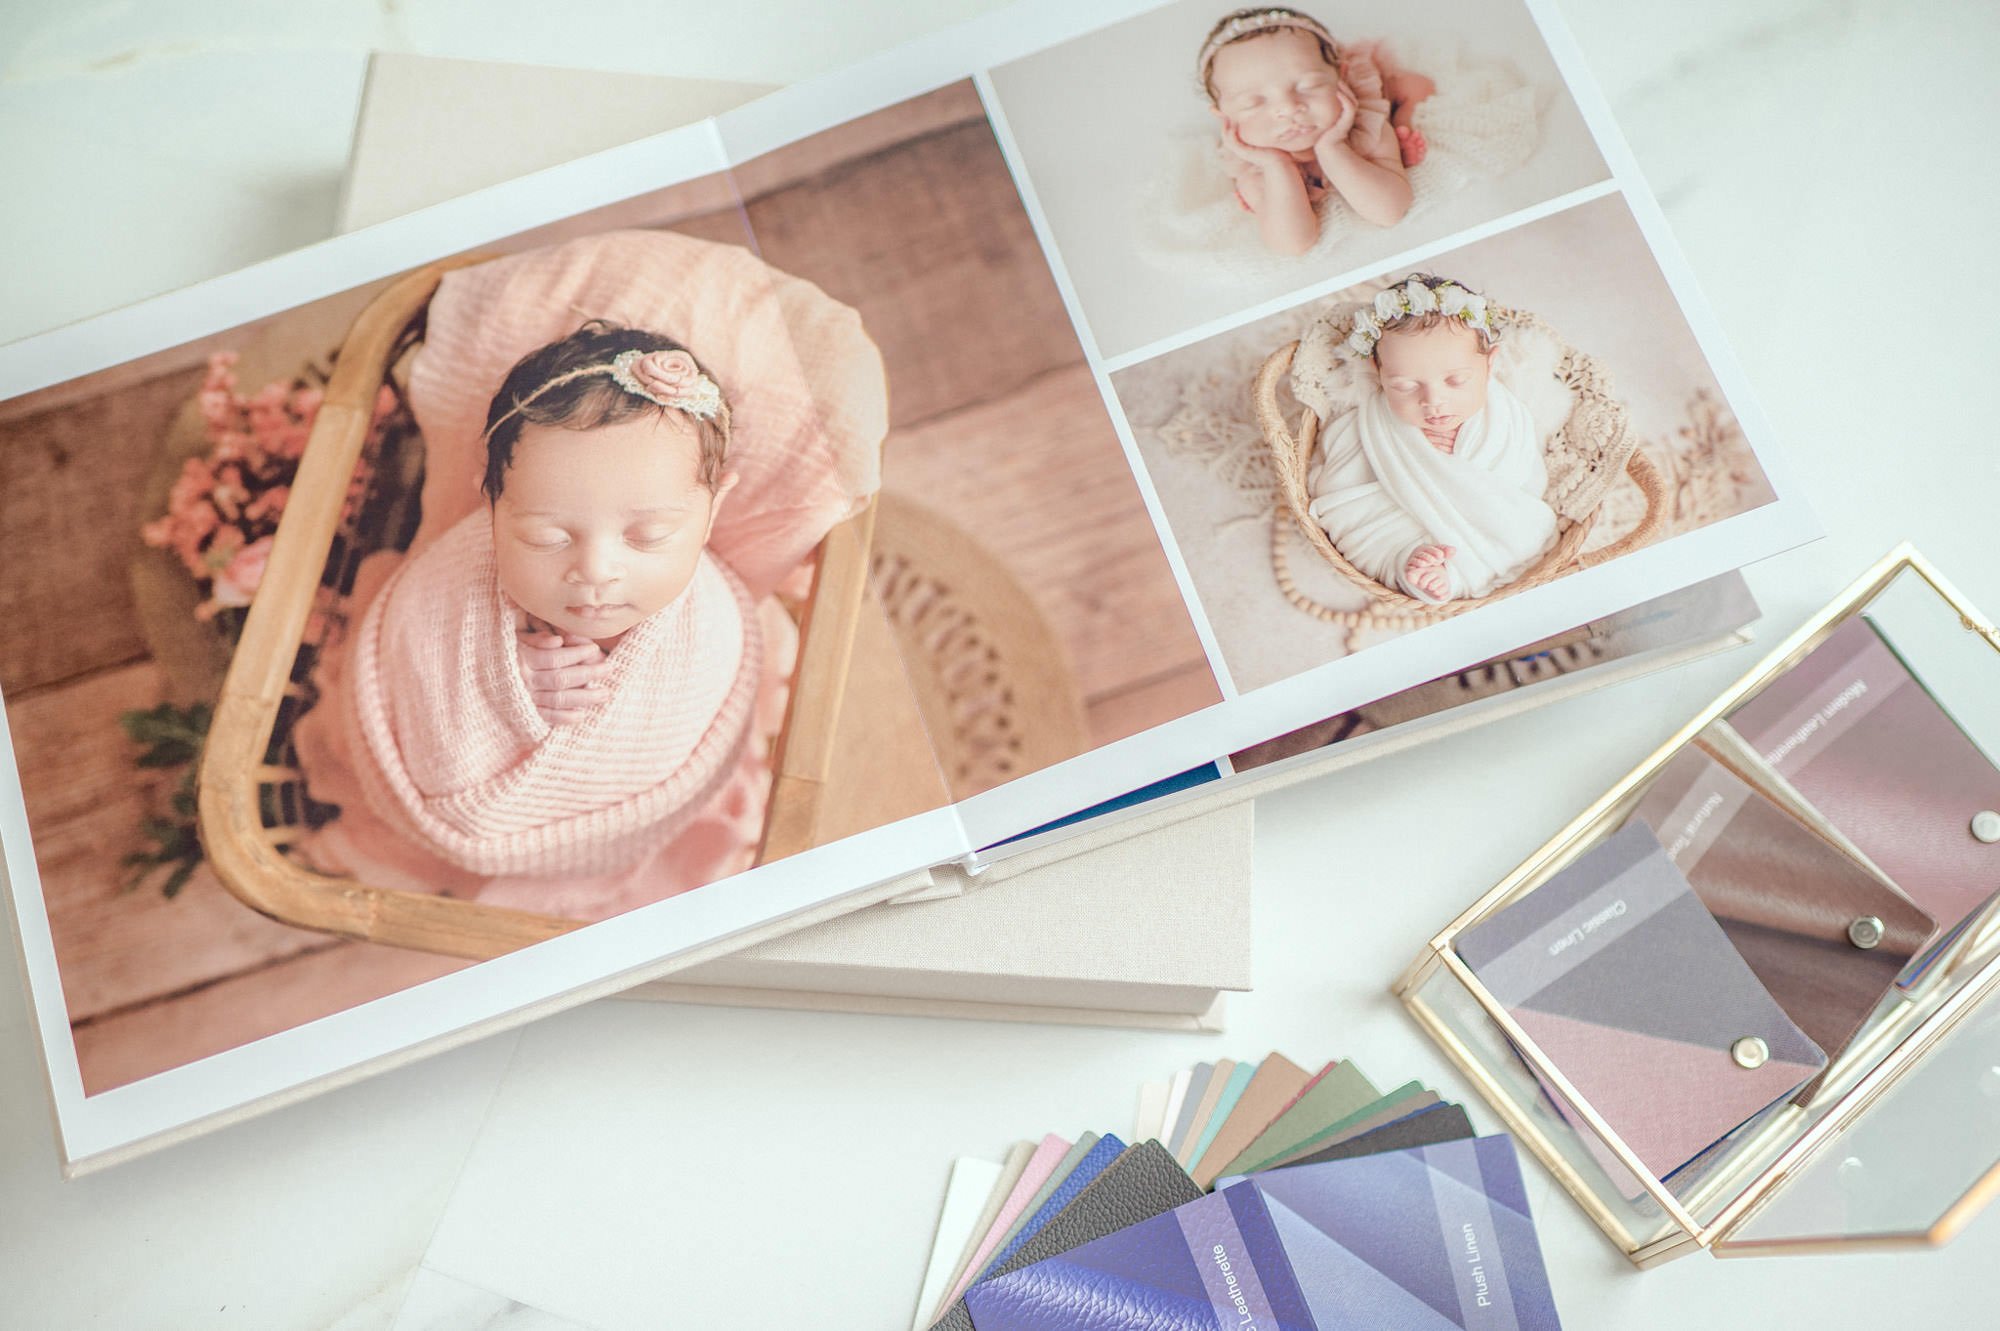 newborn album with baby photos